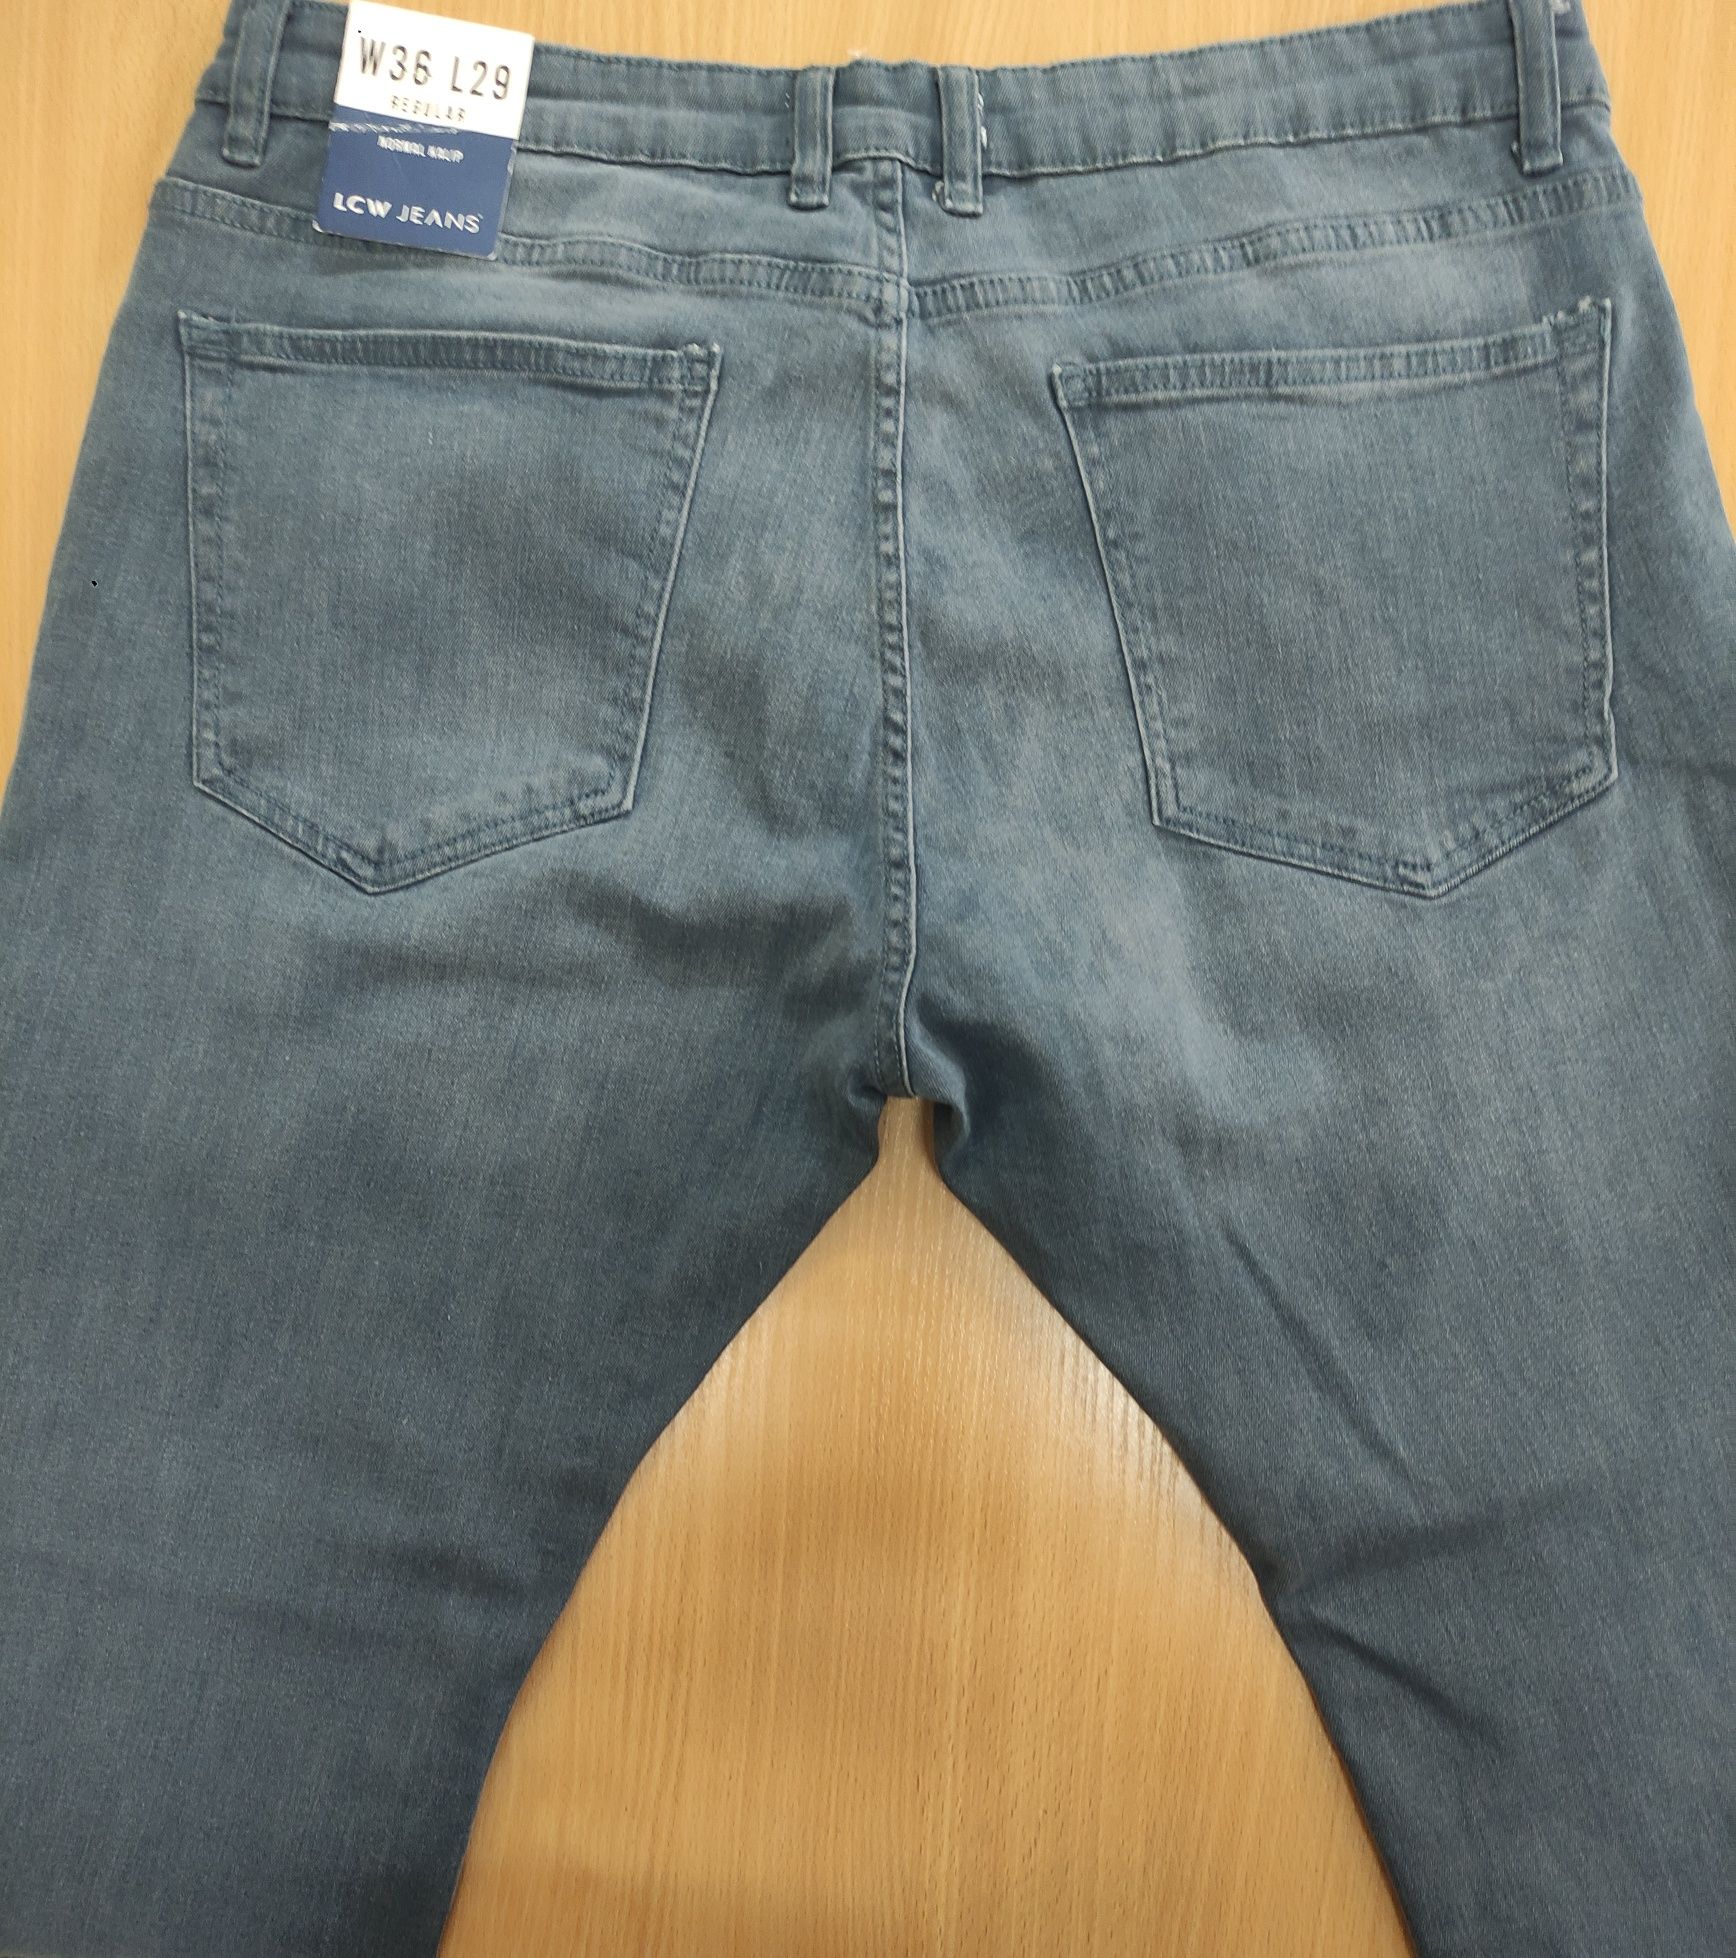 Мужские джинсы LCW Jeans